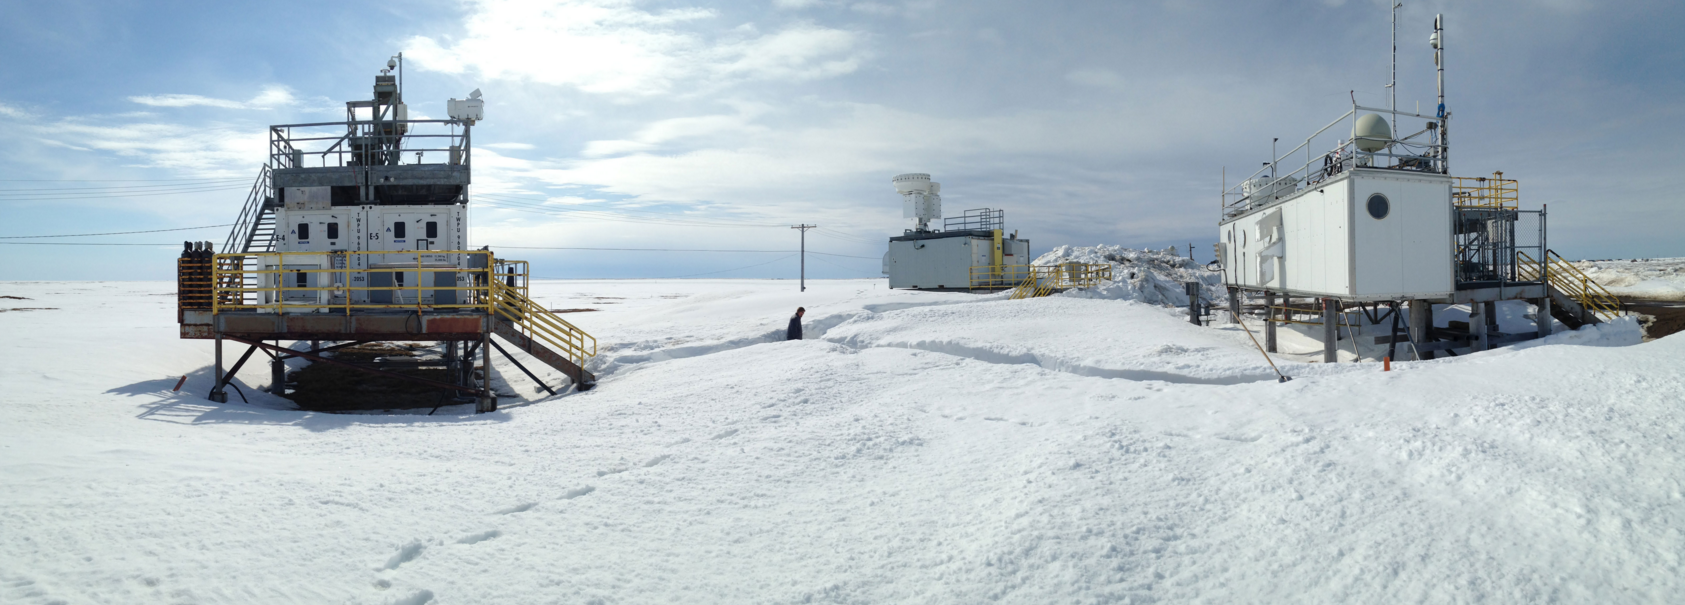 ARM's North Slope of Alaska atmospheric observatory